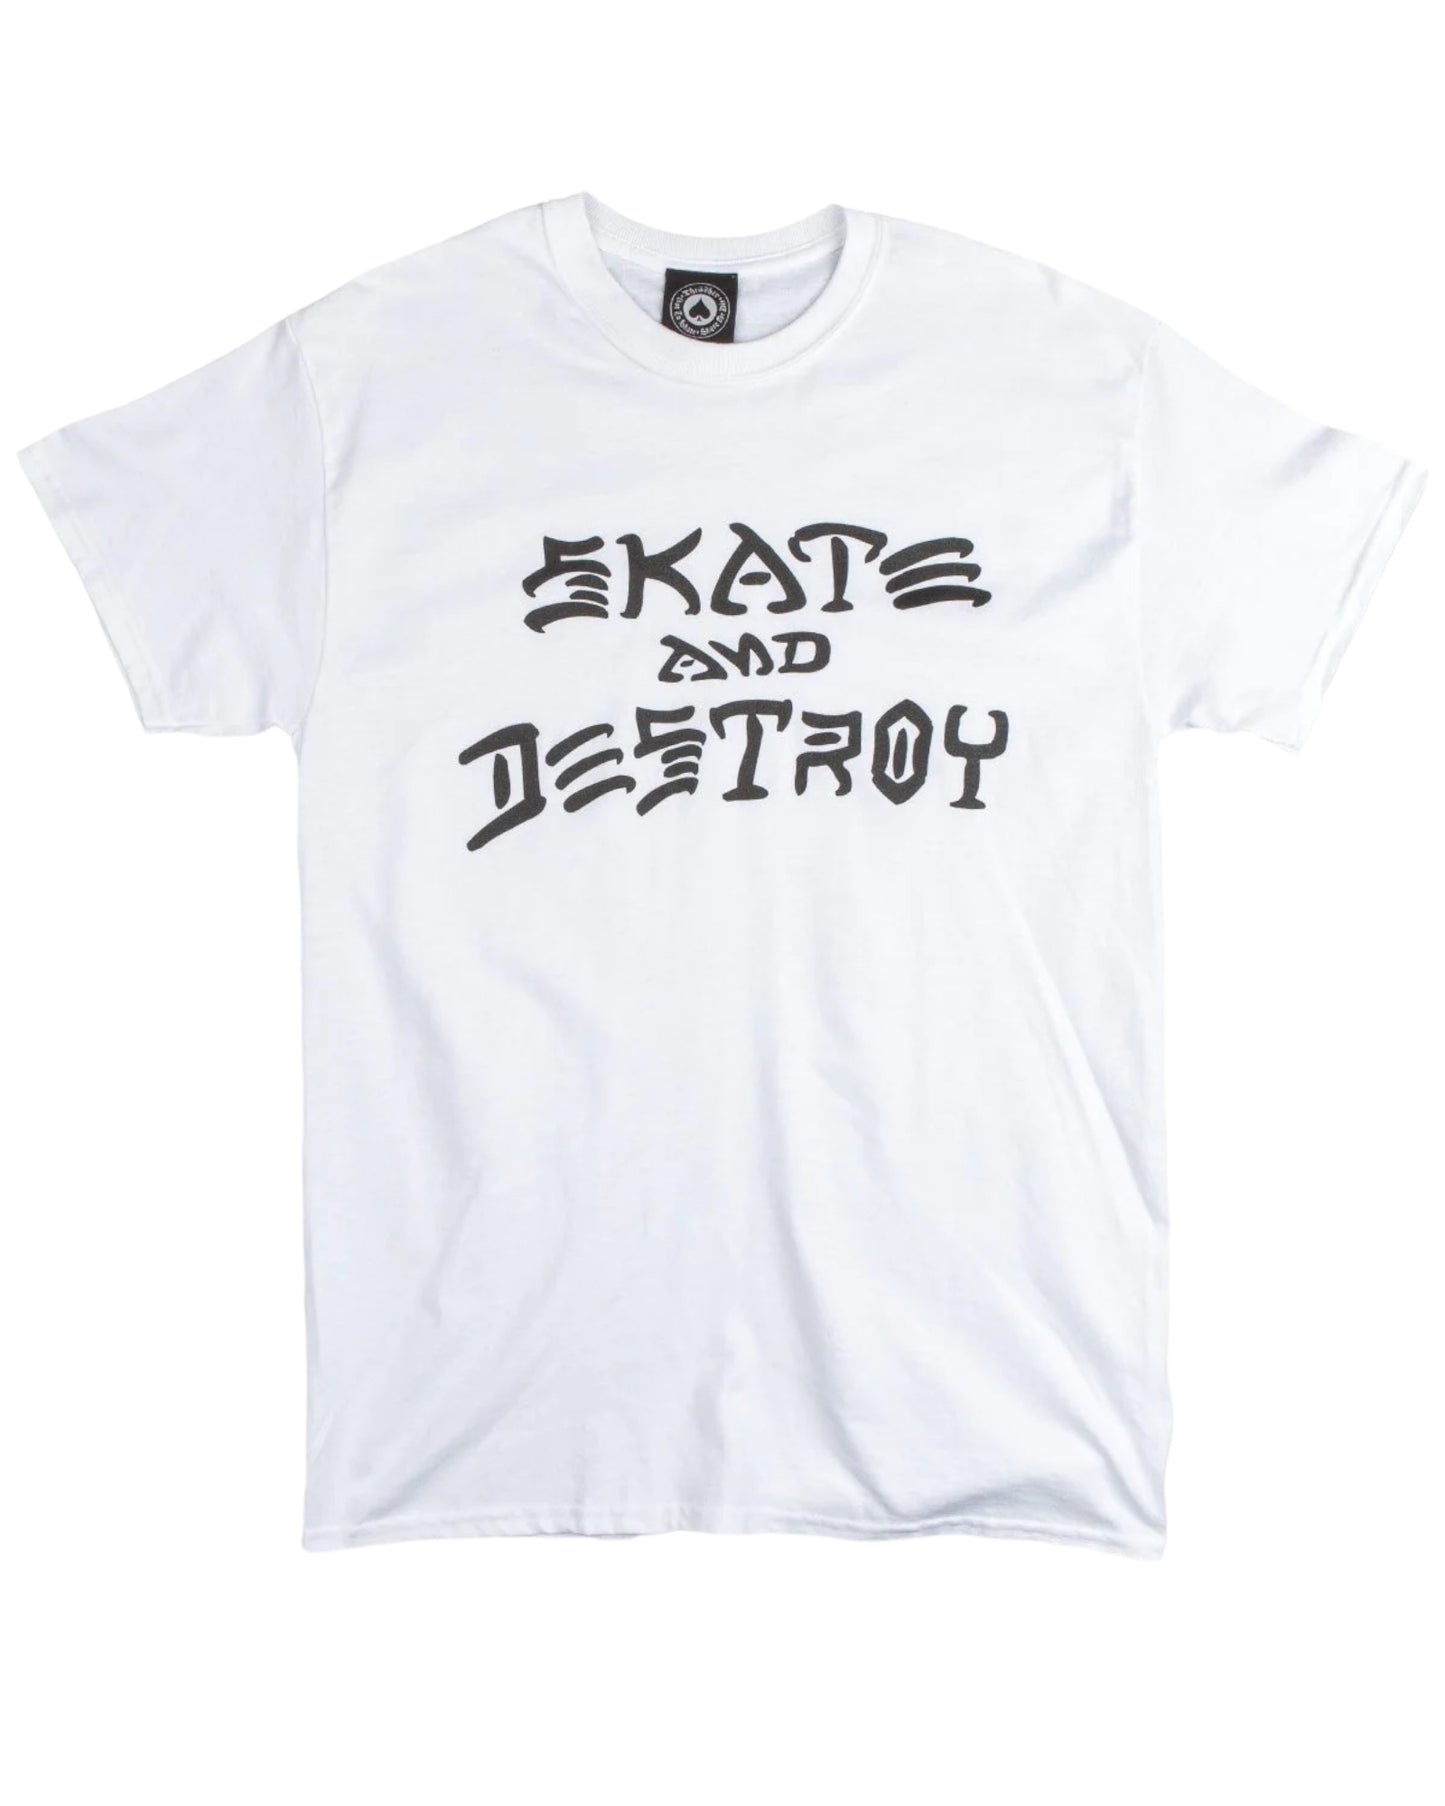 Thrasher T Shirt Skate & Destroy